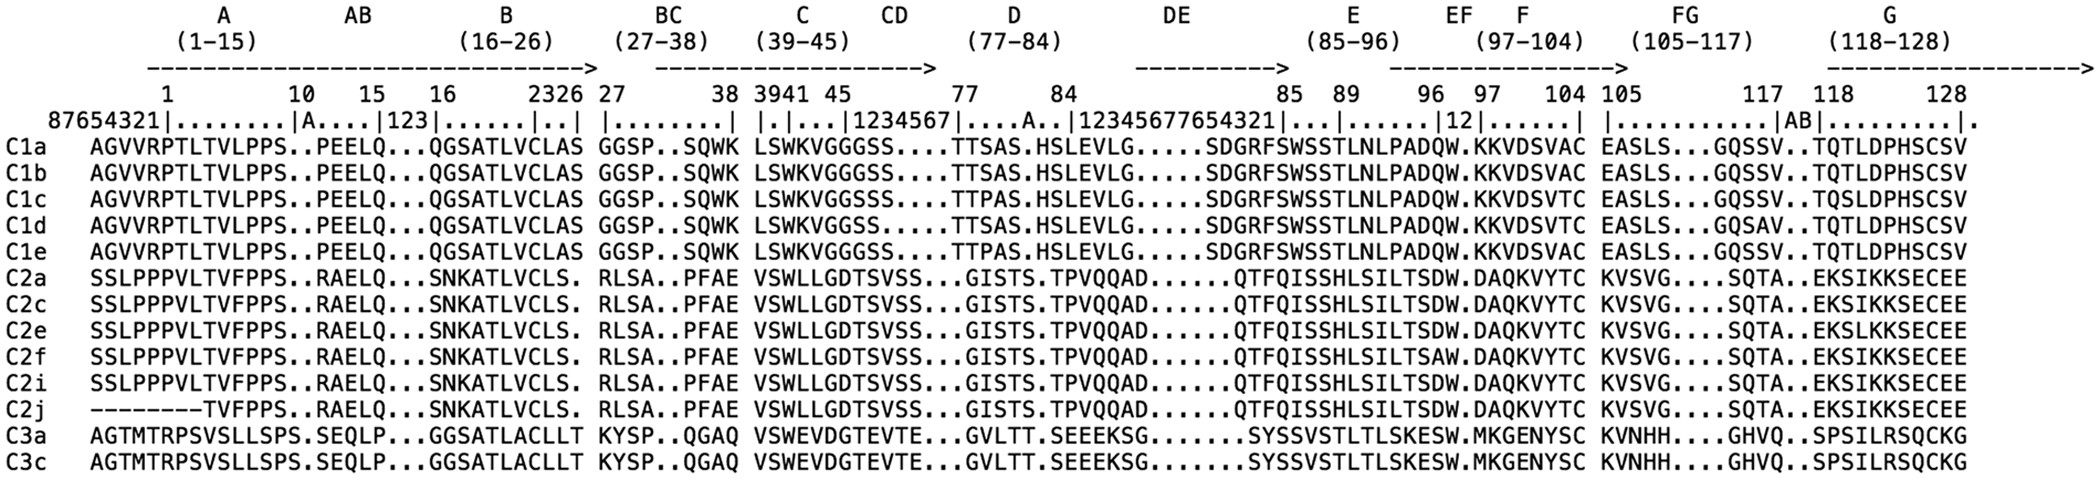 Immunoglobulin light chain (IGL) genes in torafugu: Genomic organization  and identification of a third teleost IGL isotype | Scientific Reports